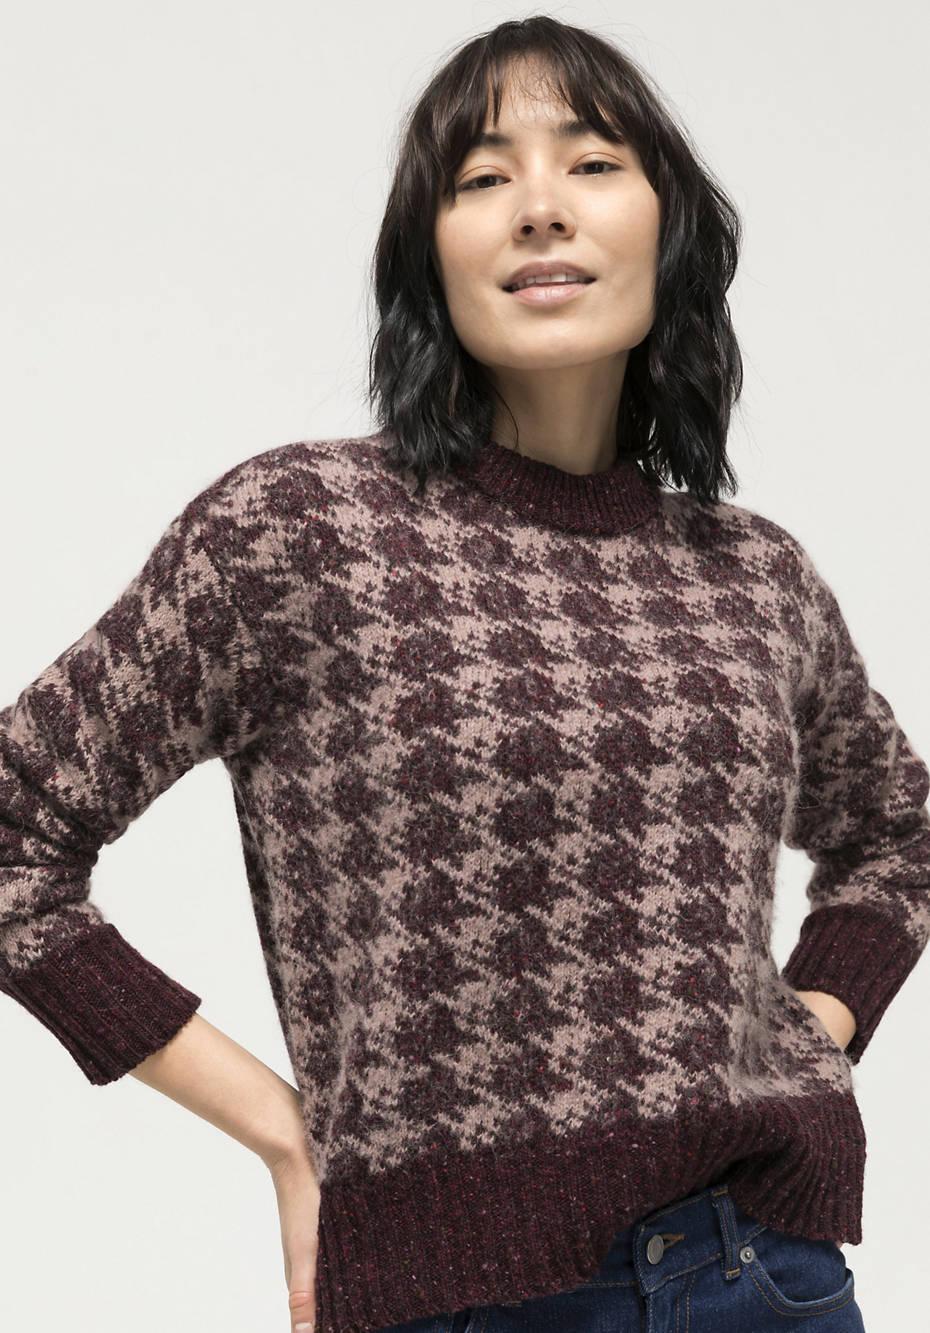 New wool jacquard sweater with alpaca